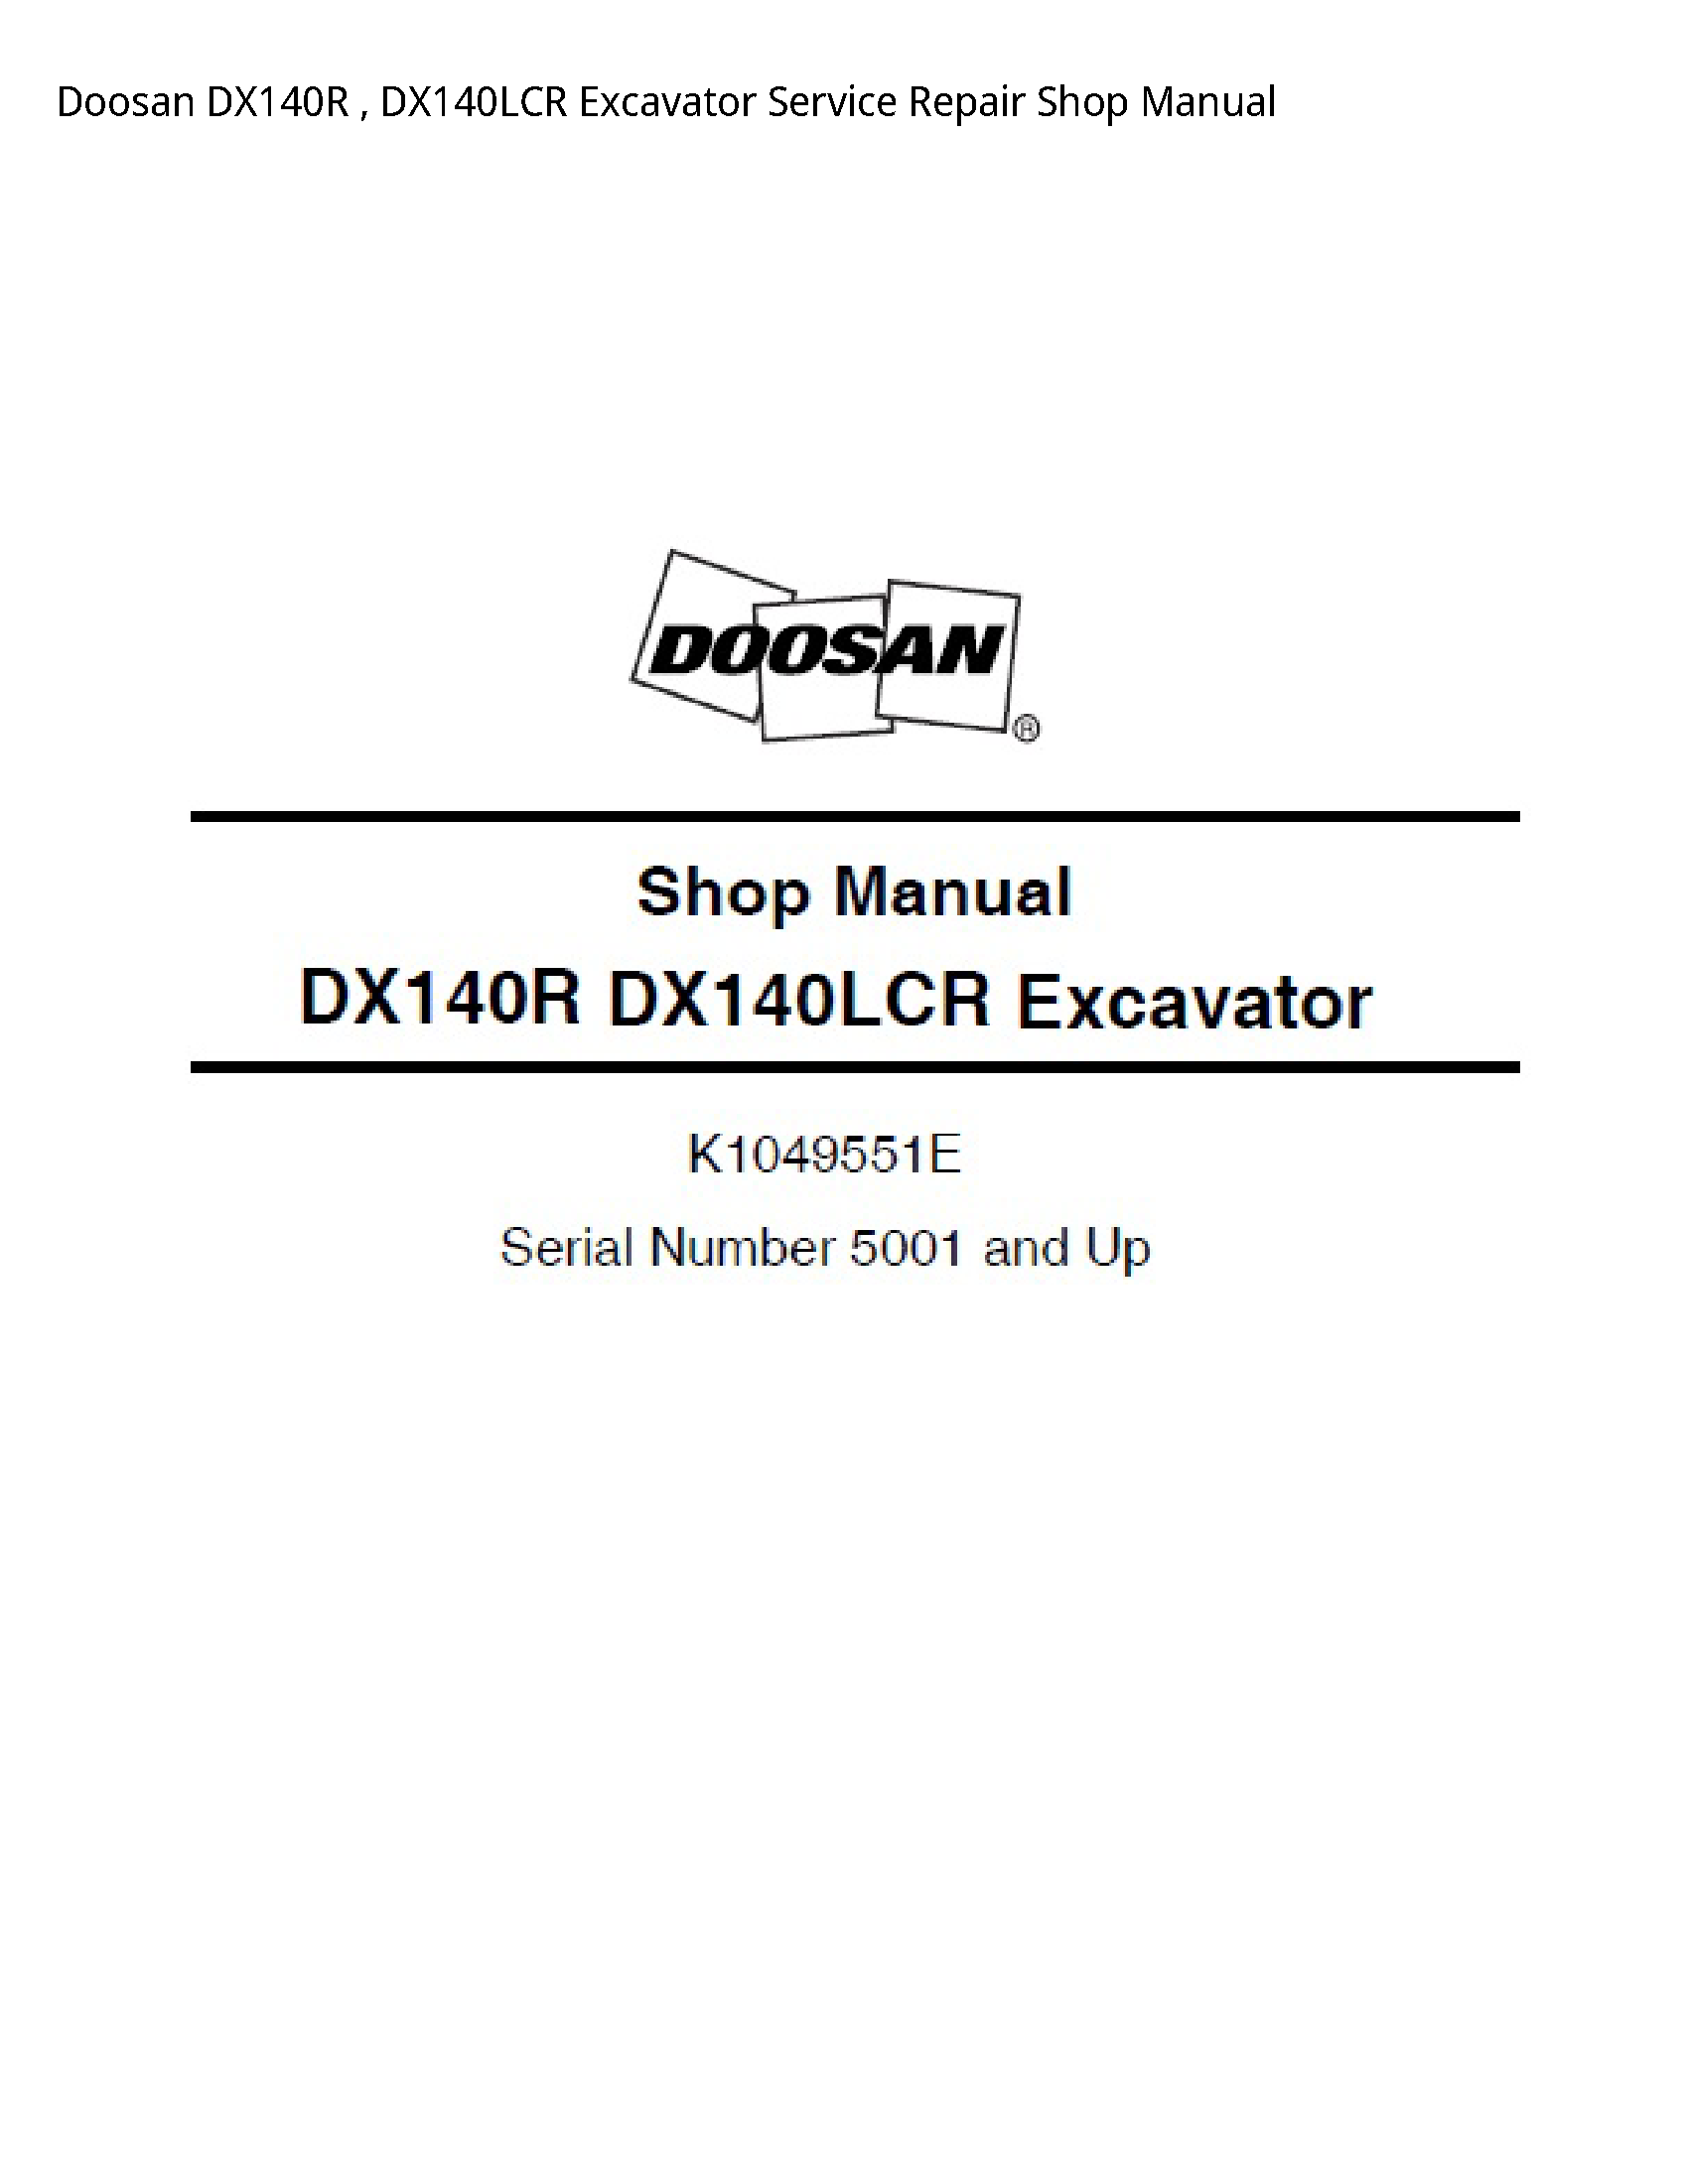 Doosan DX140R Excavator manual